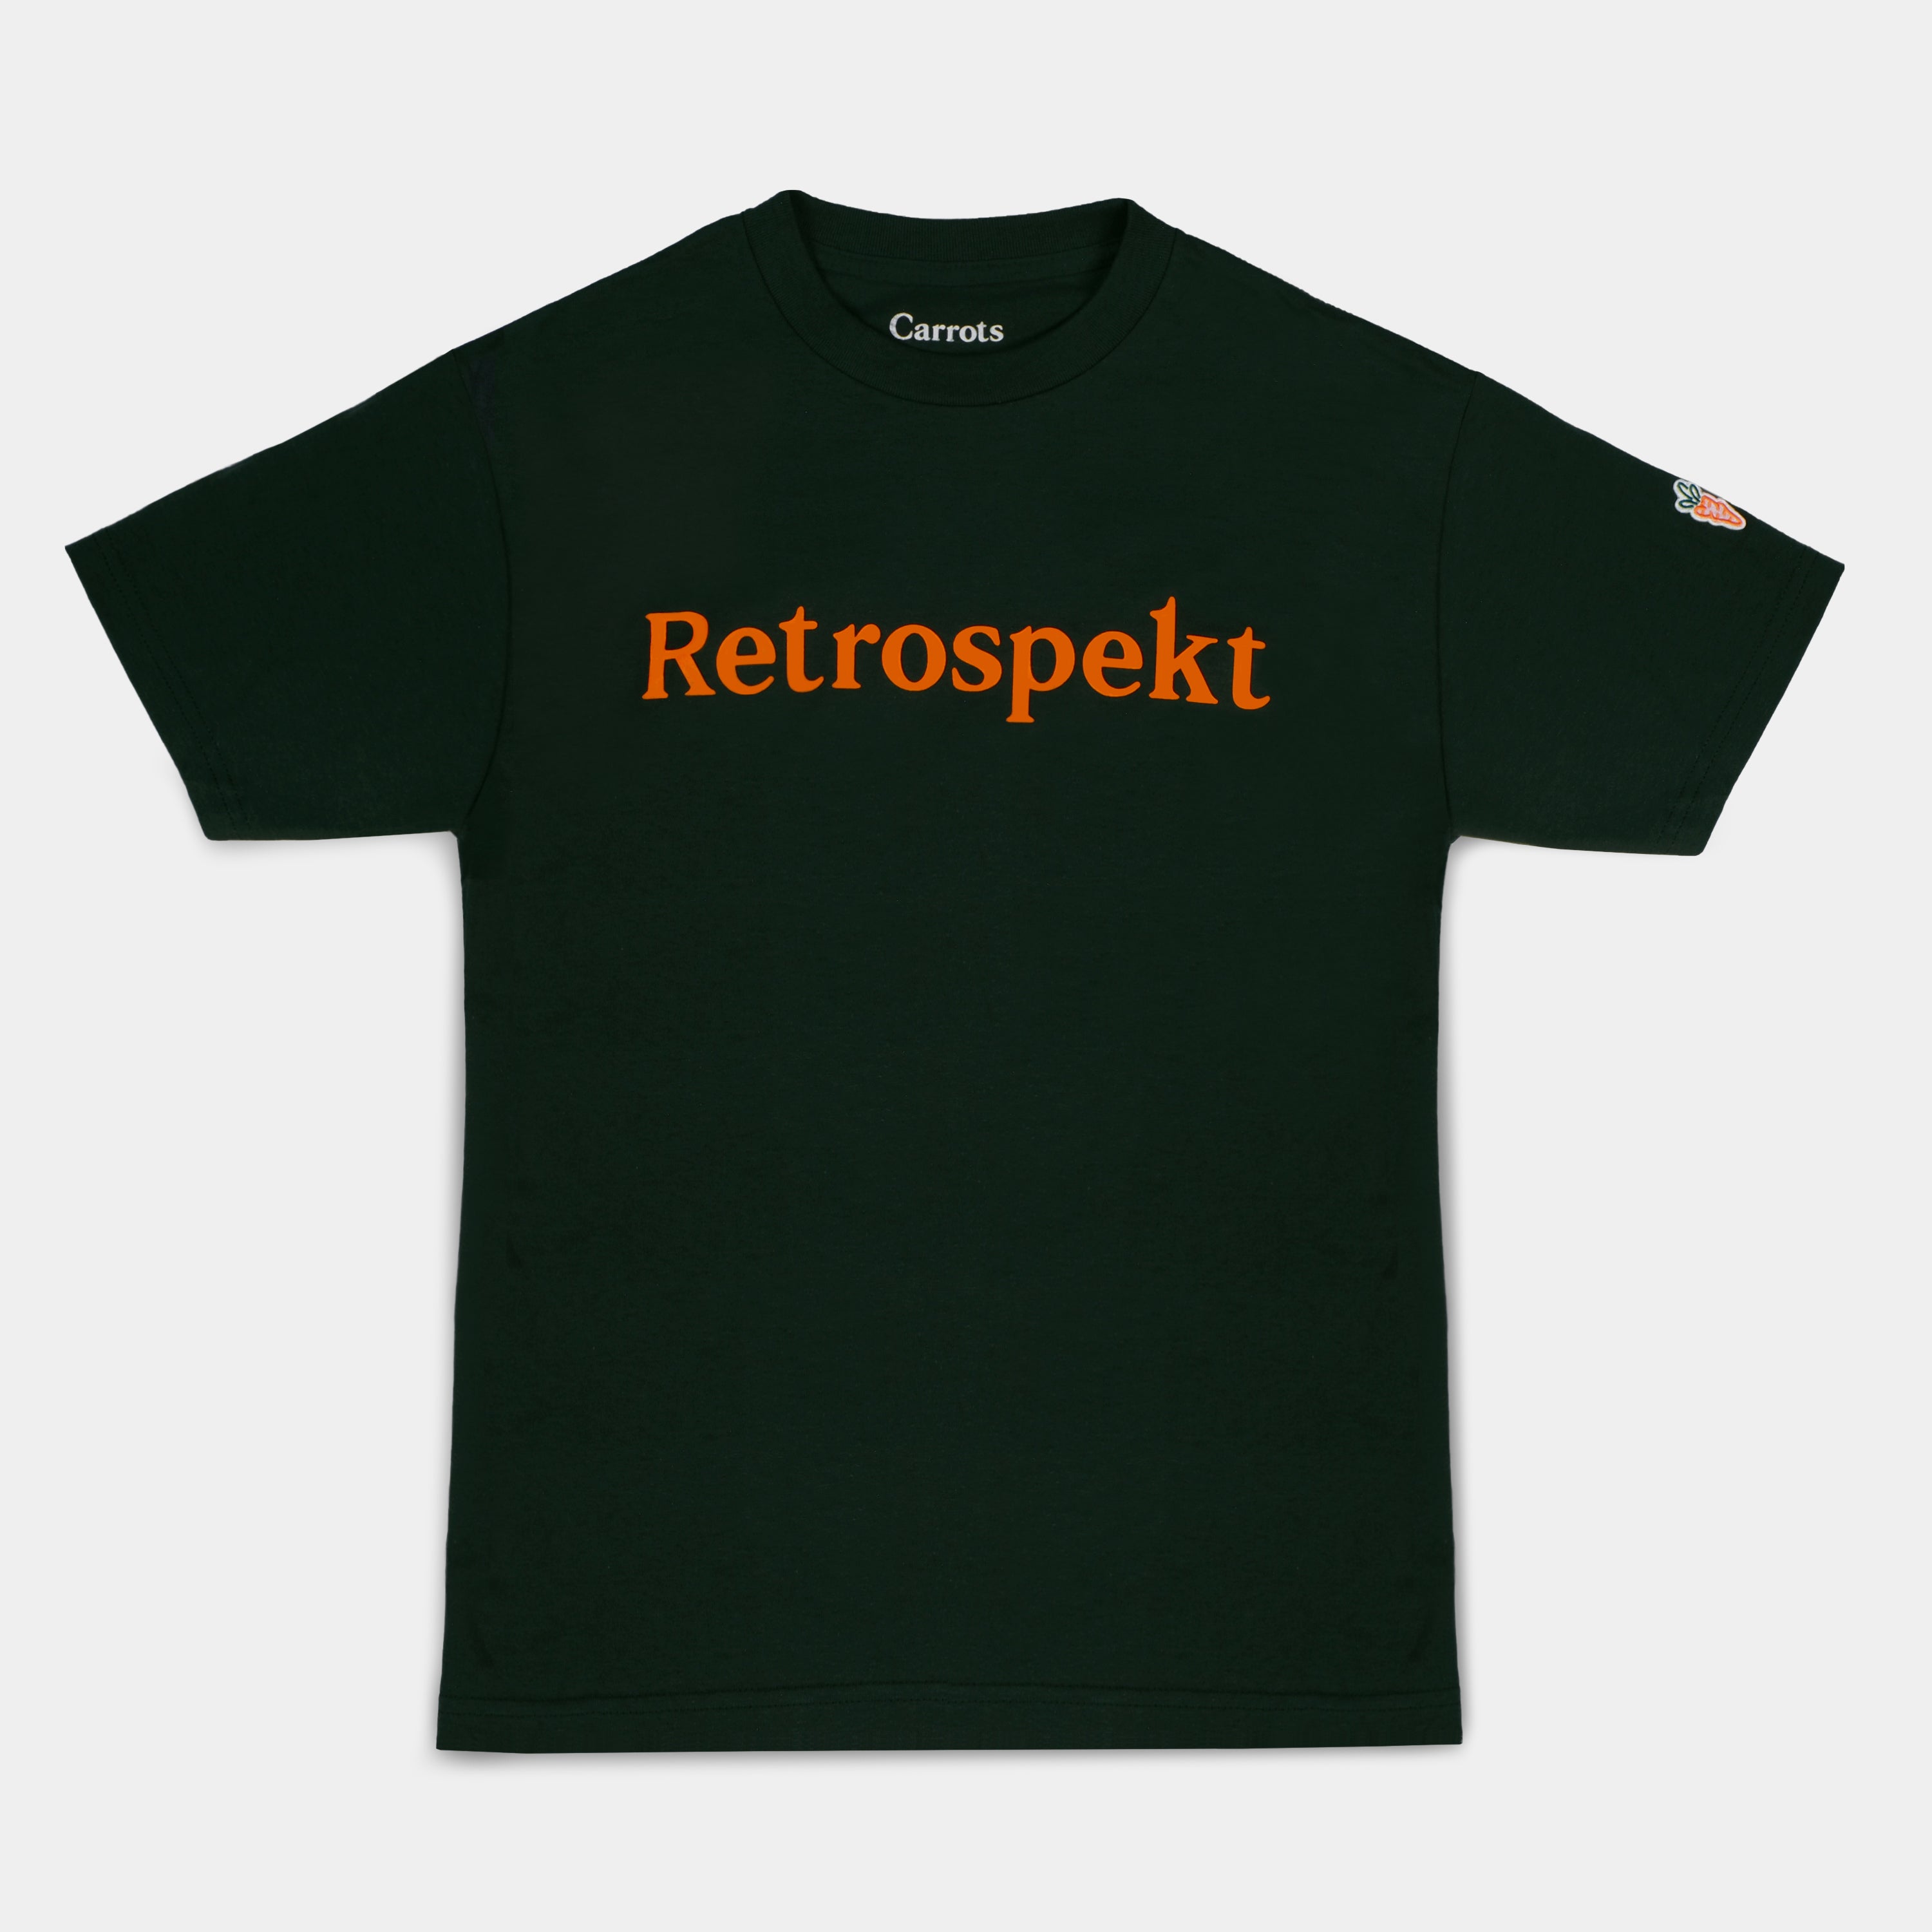 Carrots x Retrospekt Green T-Shirt